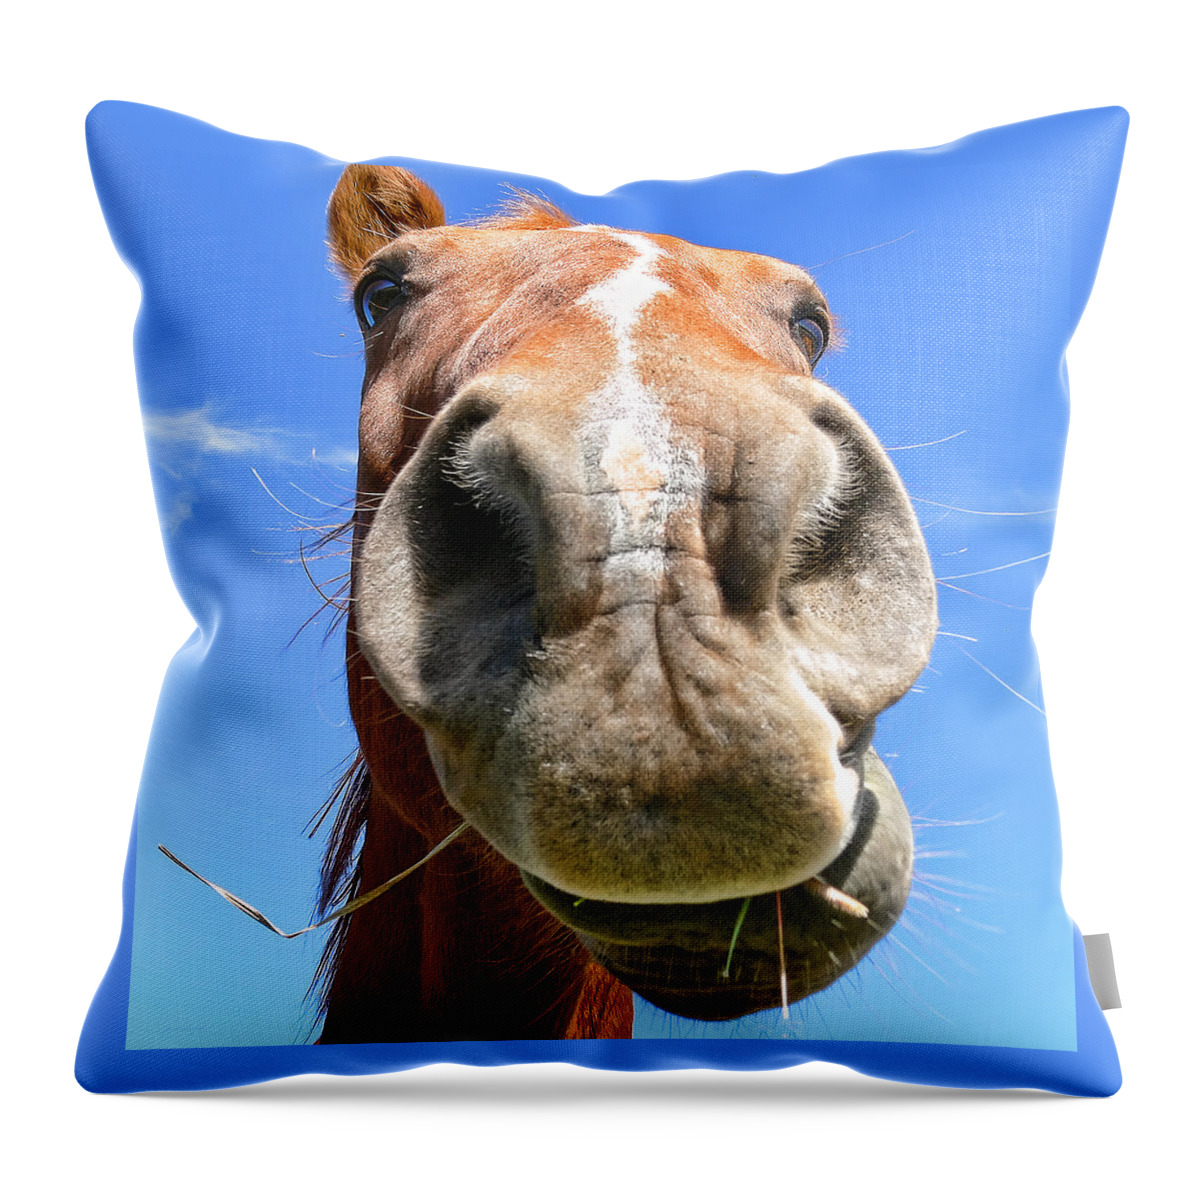 18 x 18 Throw Pillows (2) - Custom Giraffe Pattern - Animal Social Company